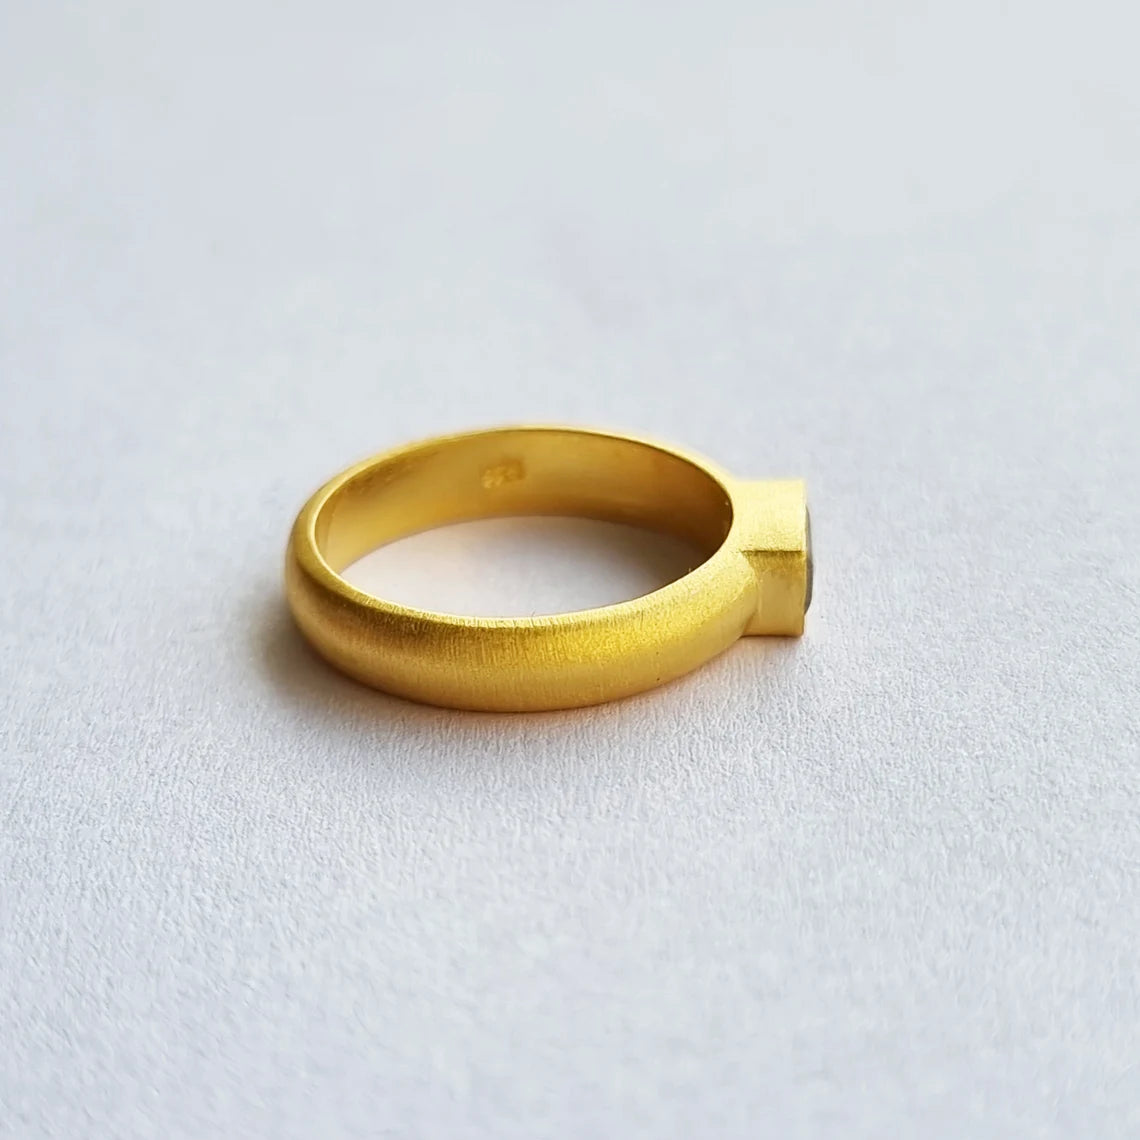 Baguette Labradorite Ring - Labradorite Gemstone Ring -925 Sterling Silver Wedding Band - Gift For Her - Dainty Ring - Minimalist